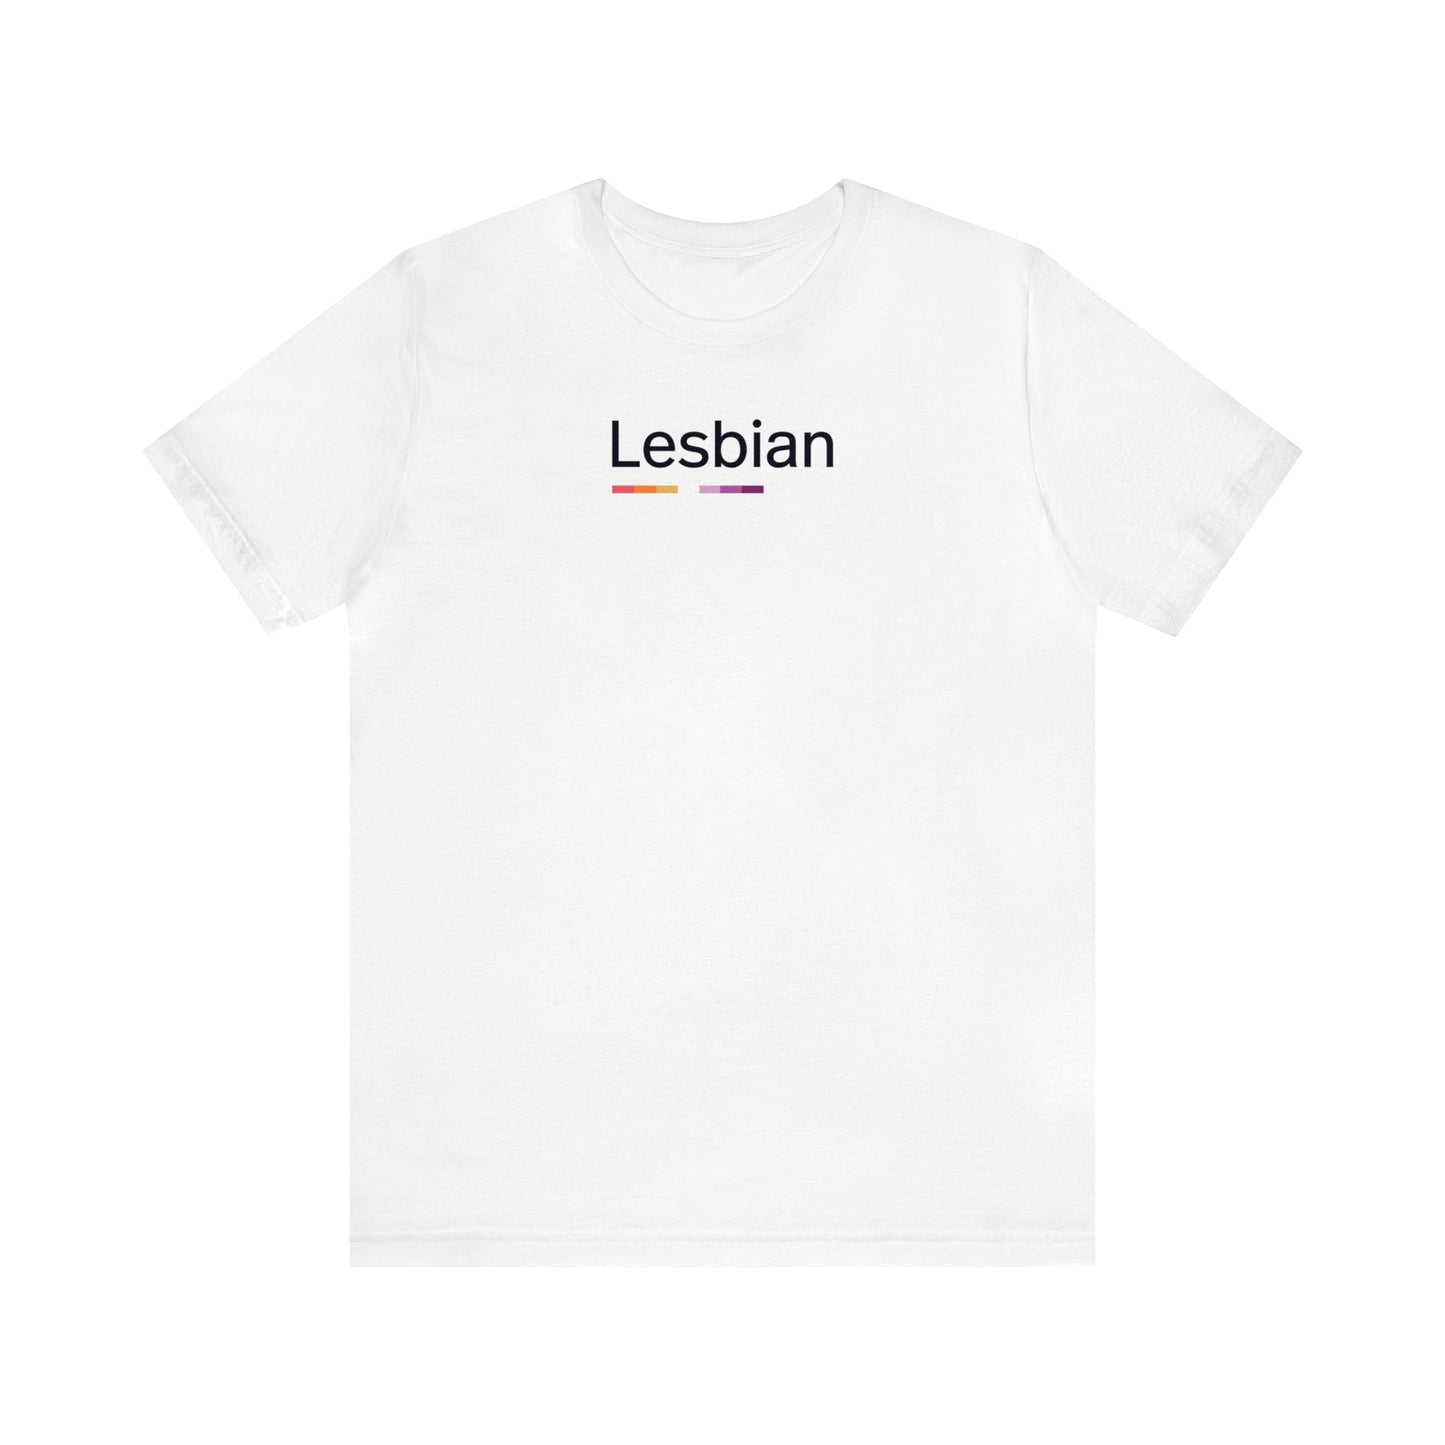 Lesbian Tee